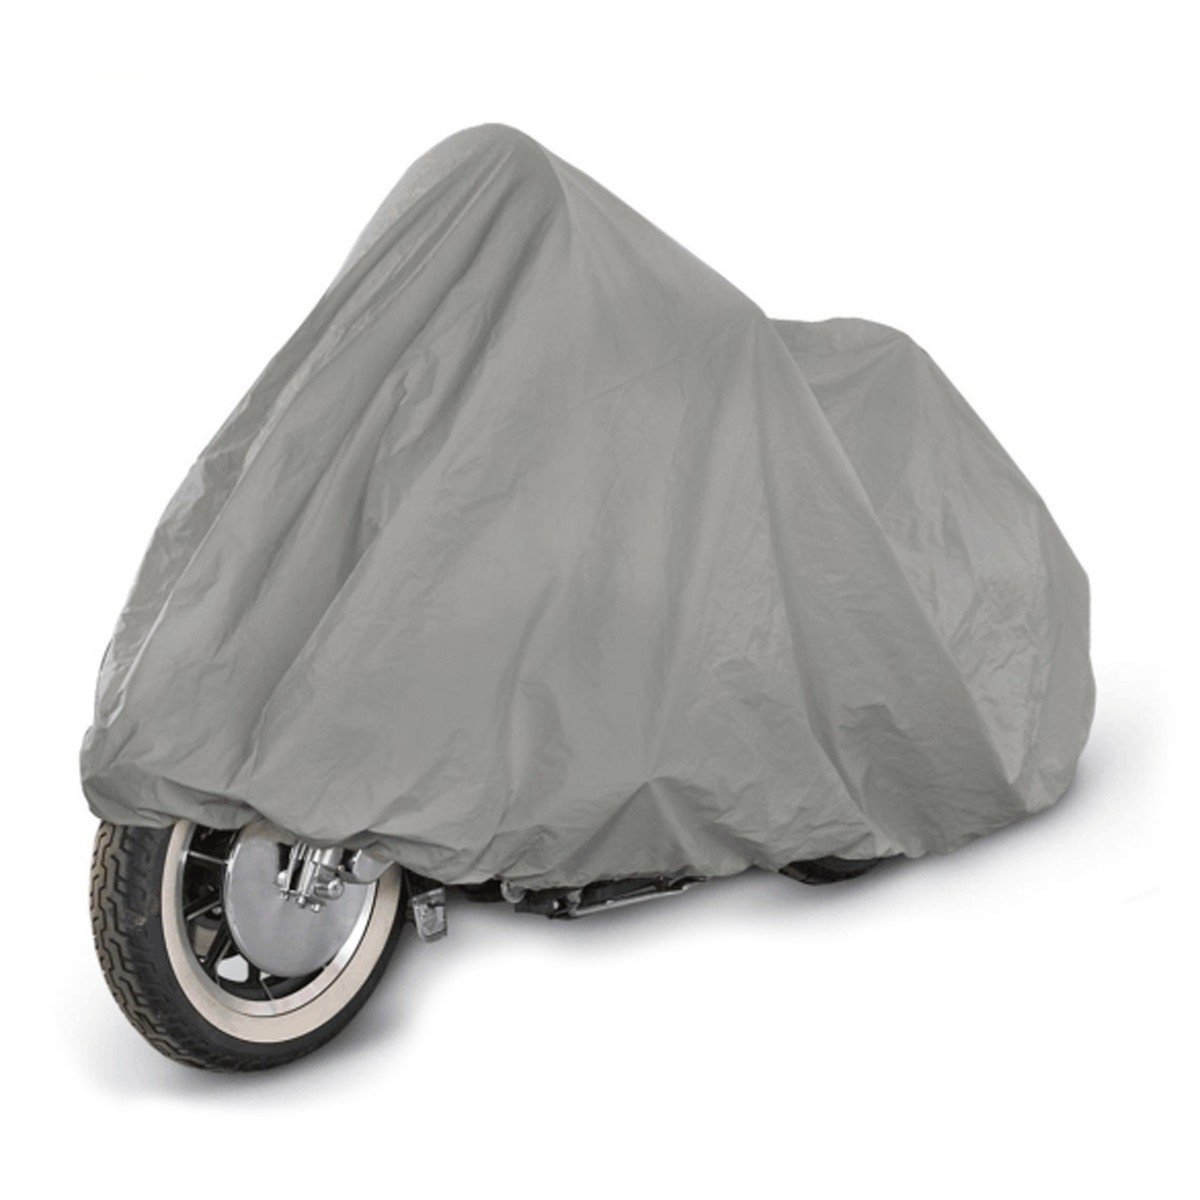 Forro Cobertor Funda D Moto Impermeable Resistente Protector OEM